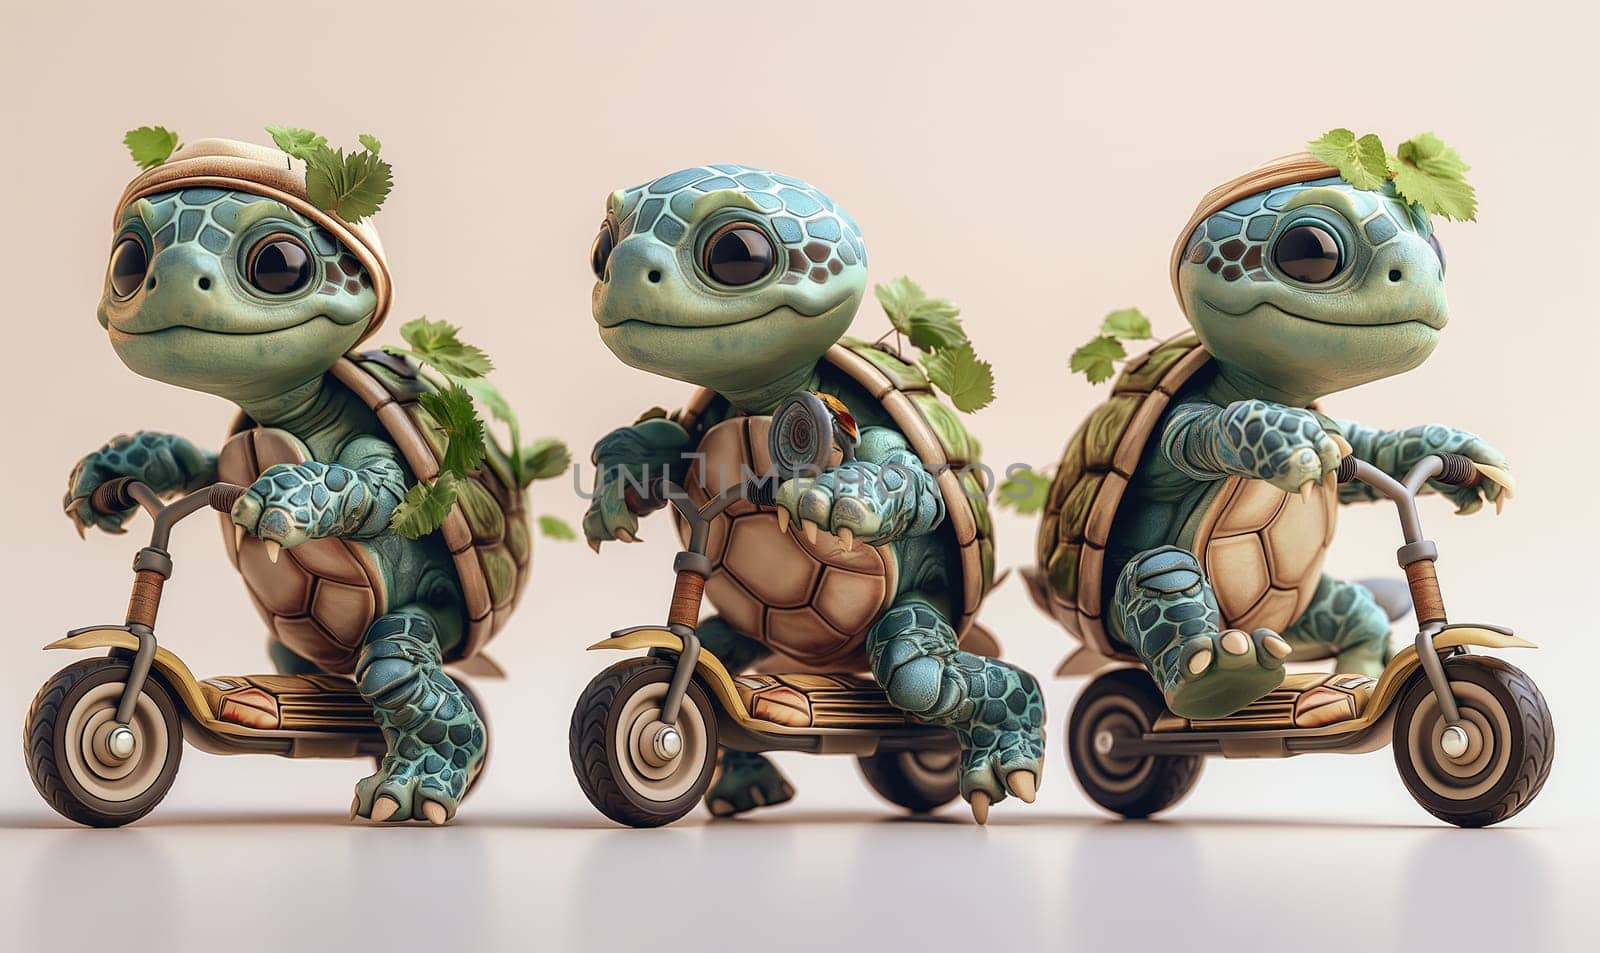 Cartoon, little turtles joyfully ride a scooter. Selective focus.